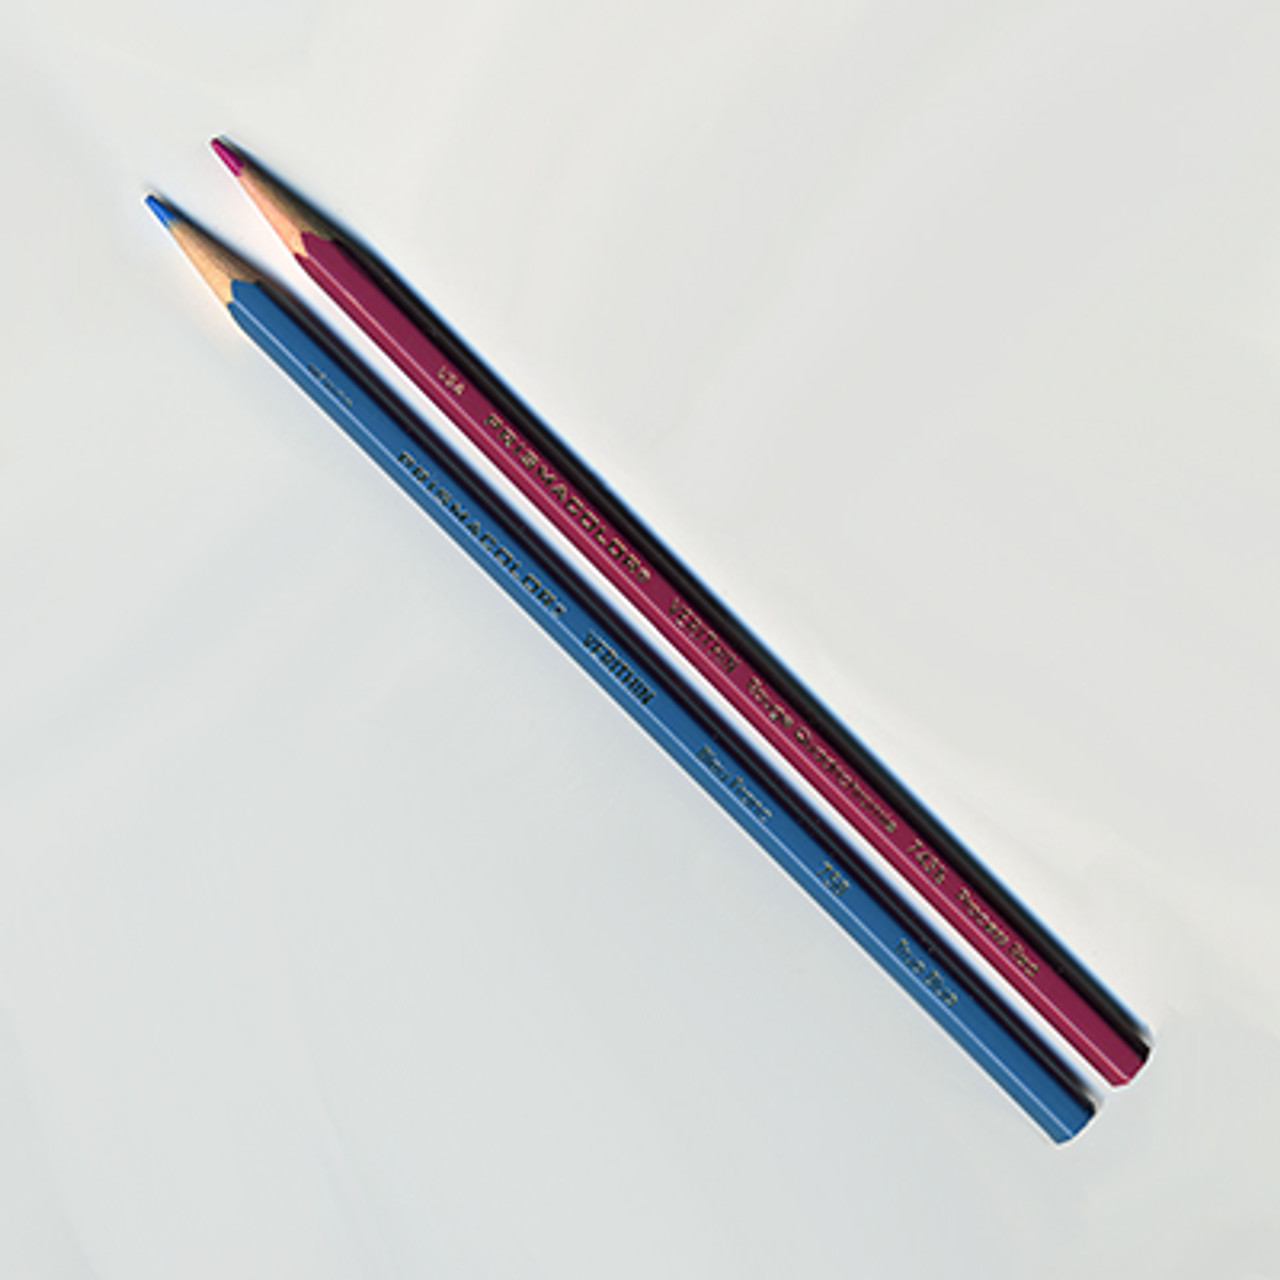  Prismacolor - Verithin Colored Pencil - Set - 12-Color Set :  Office Products